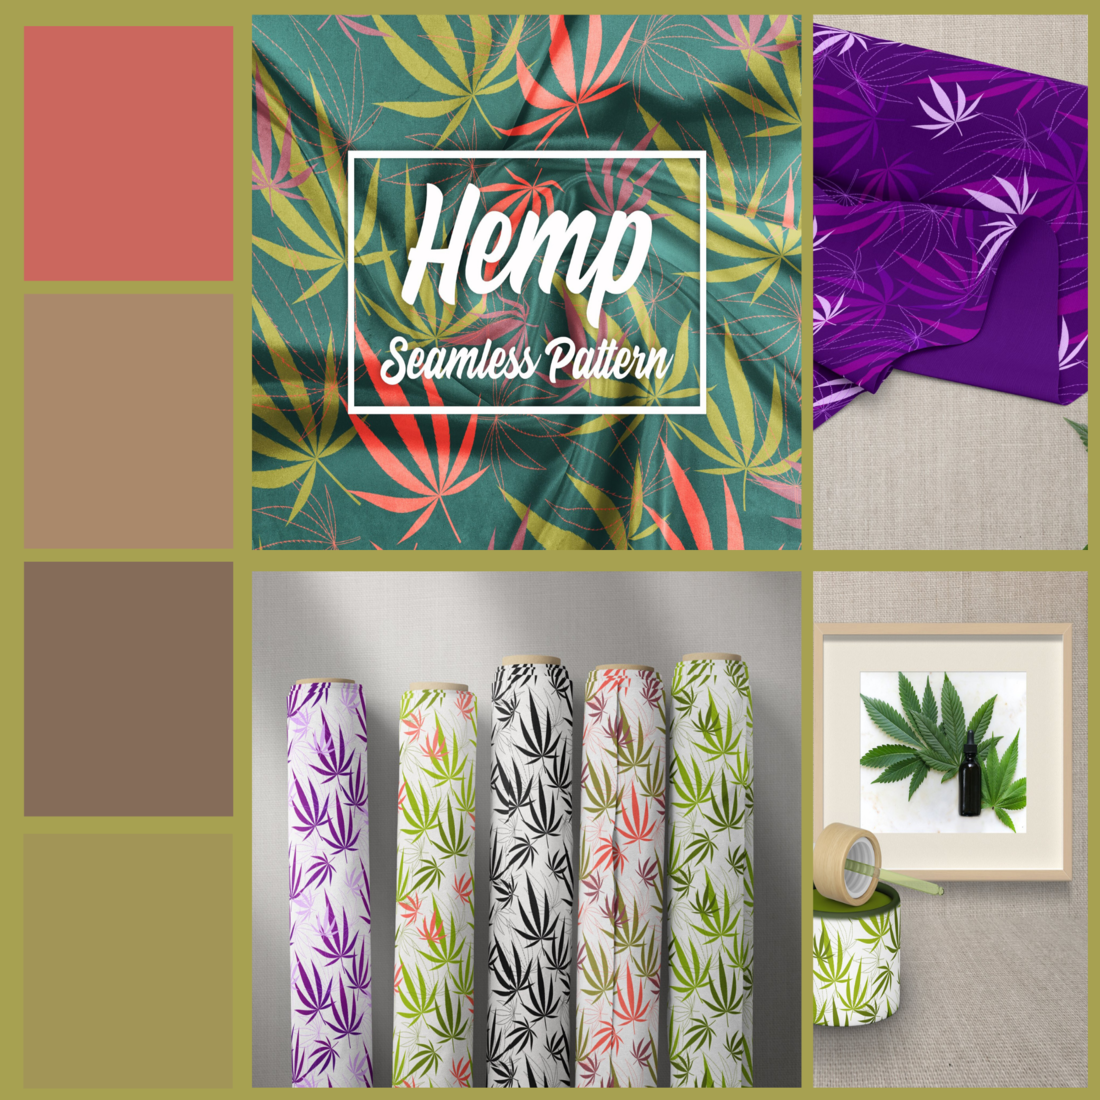 hemp leaves seamless pattern cover image.